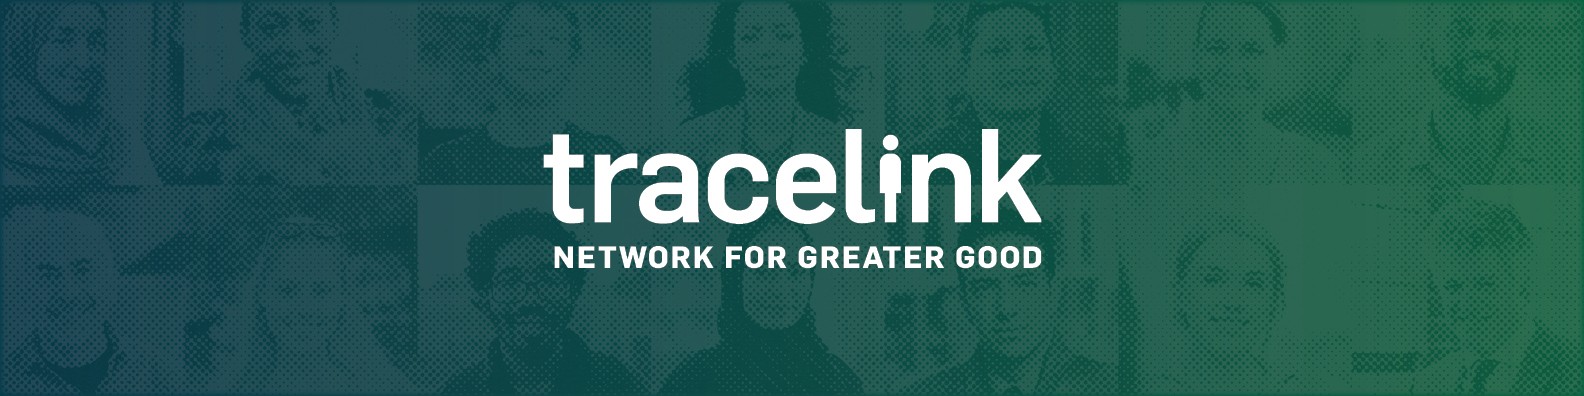 TraceLink | LinkedIn